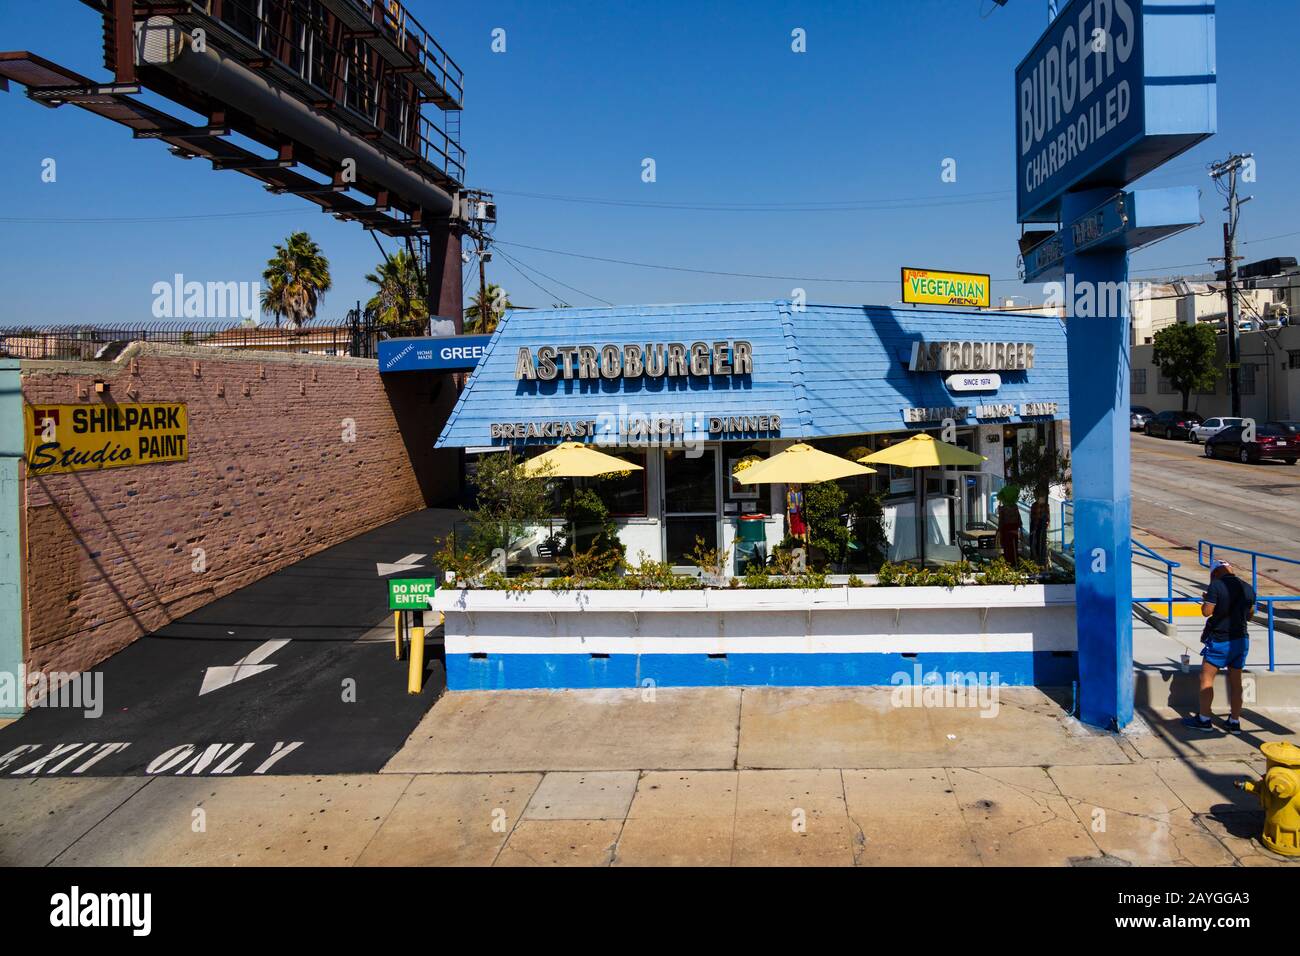 Astroburgers restaurant, Melrose Avenue, Hollywood, Los Angeles, California, USA Stock Photo